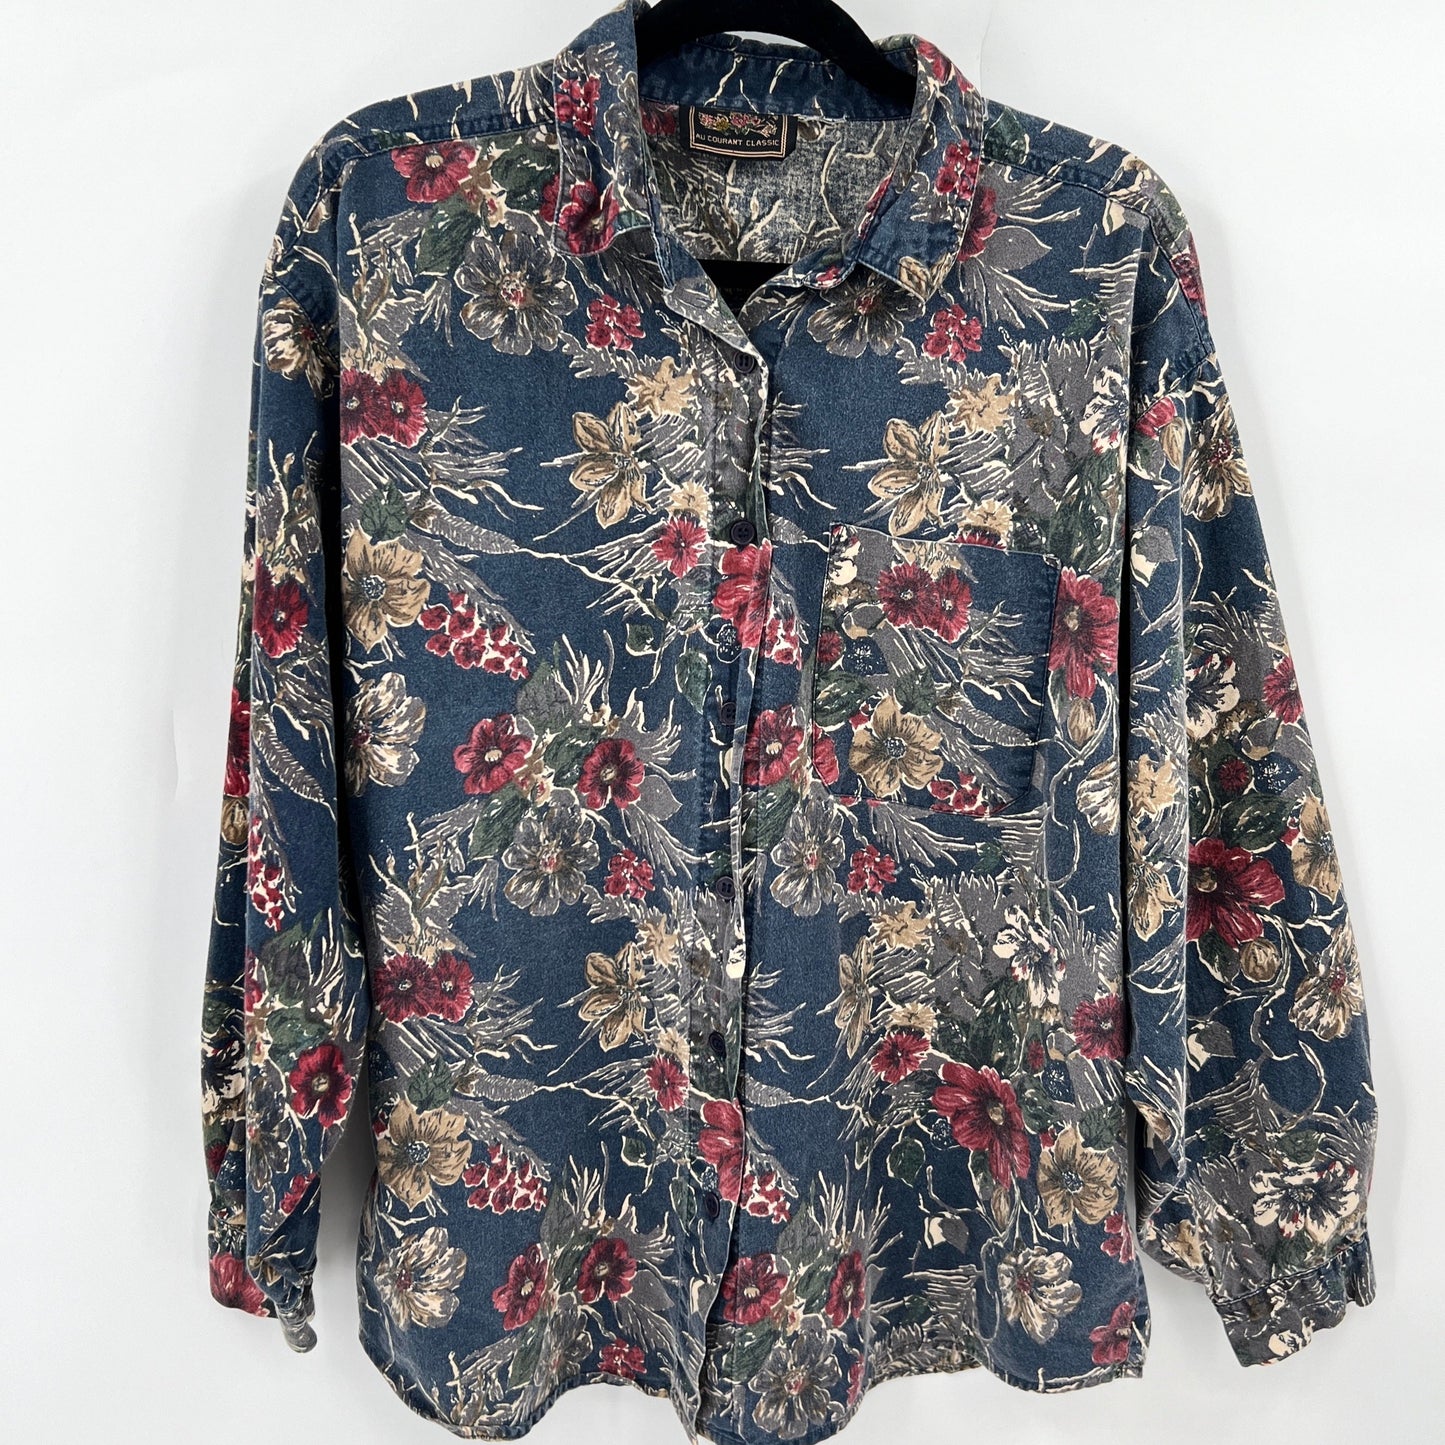 SOLD. Vintage Cotton Floral Casual Shirt